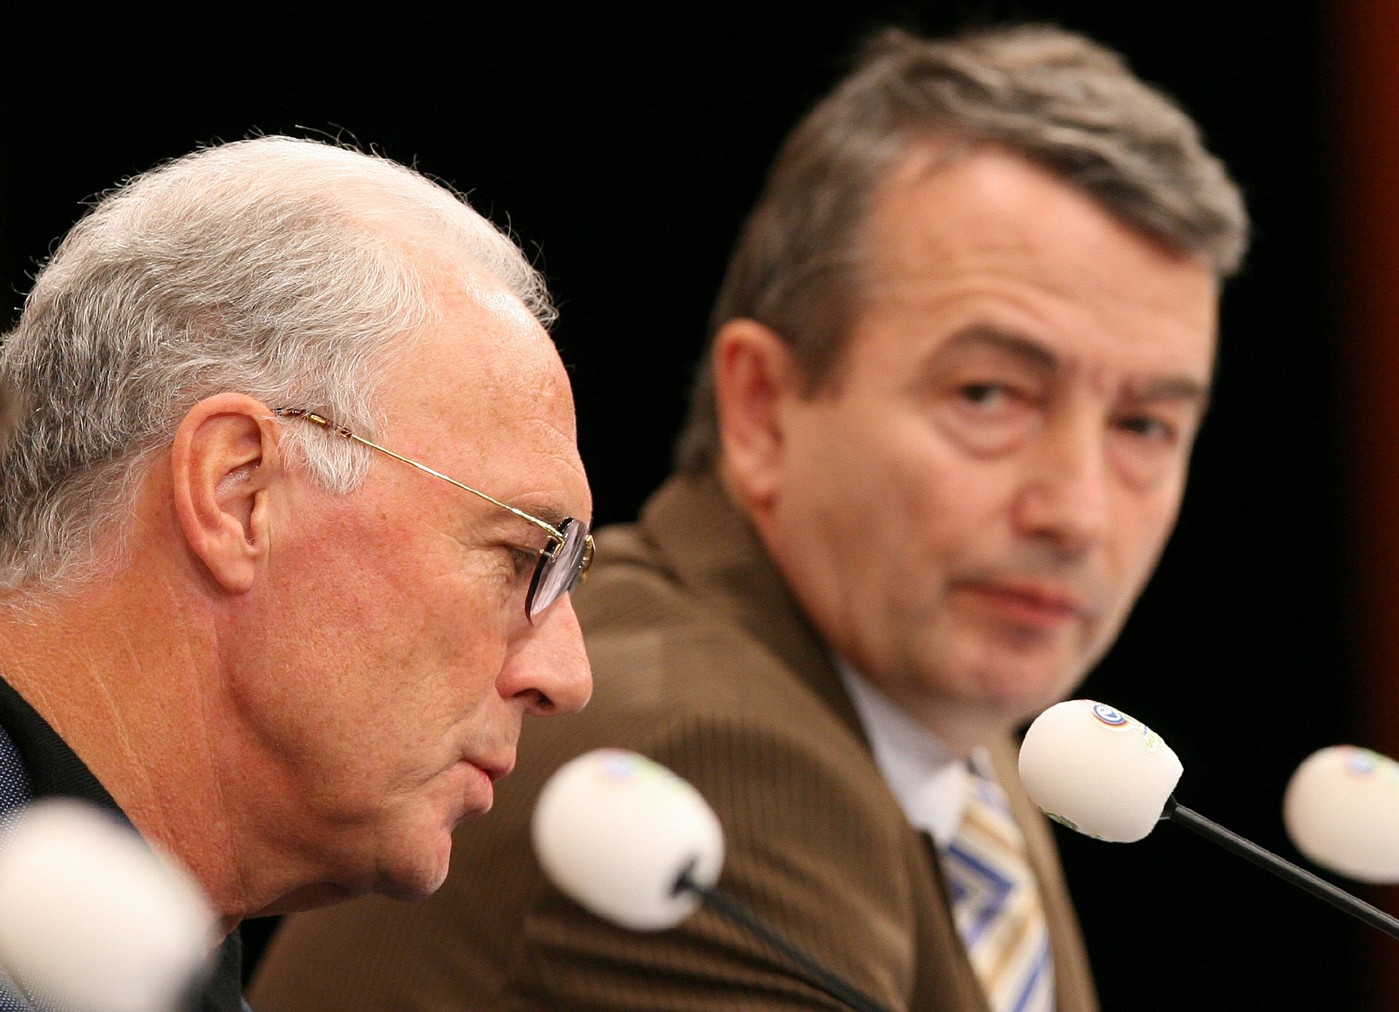 Beckenbauer-alors-president-comite-organisation-Mondial-2006Wolfgang-Niersbach-7-decembre-2005-Leipzig_3_1400_1012